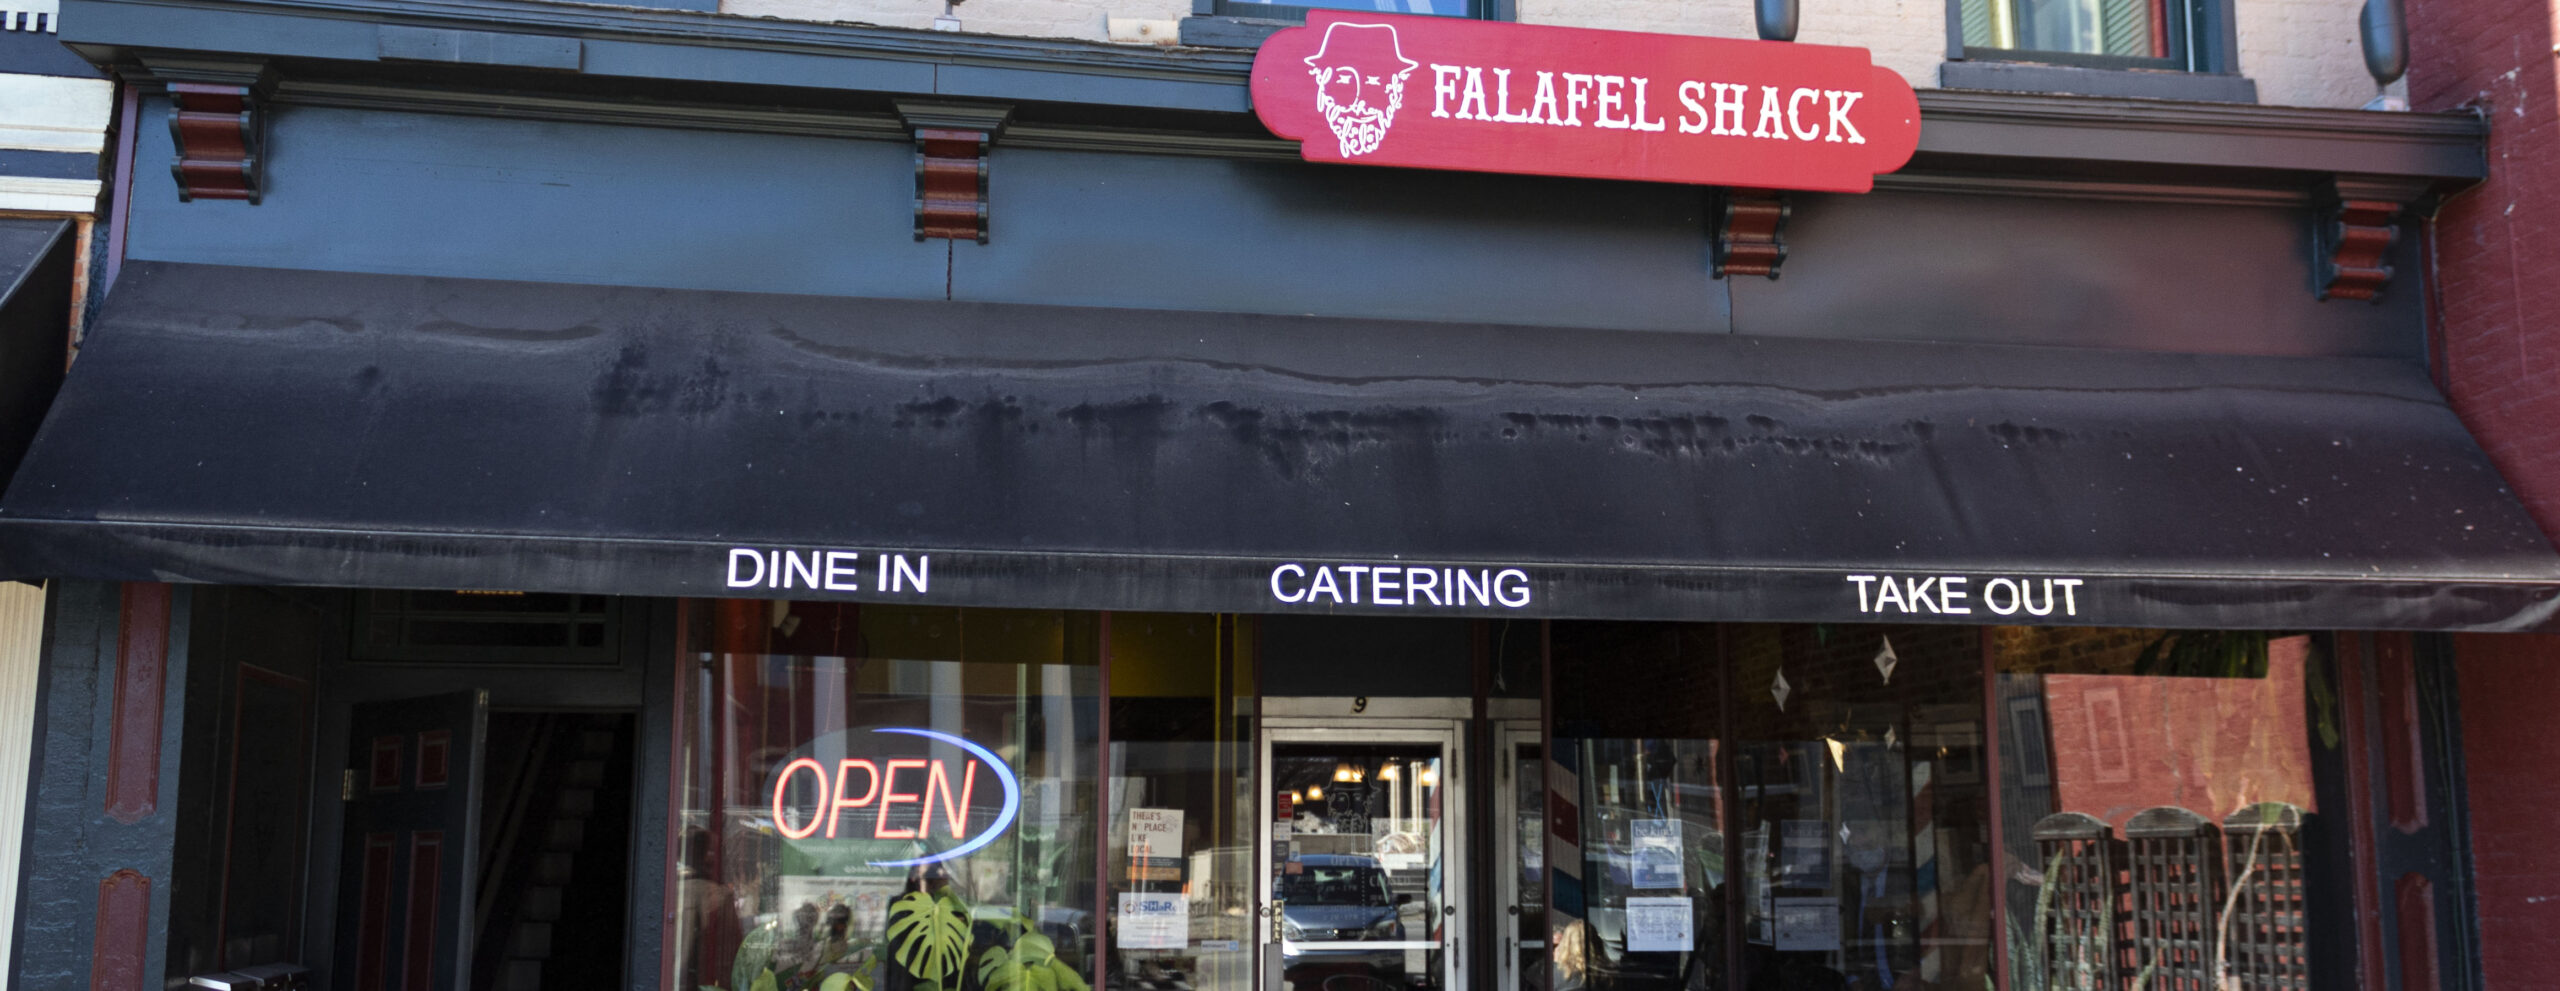 Falafel Shack Entrance Photo by Hannah Middaugh